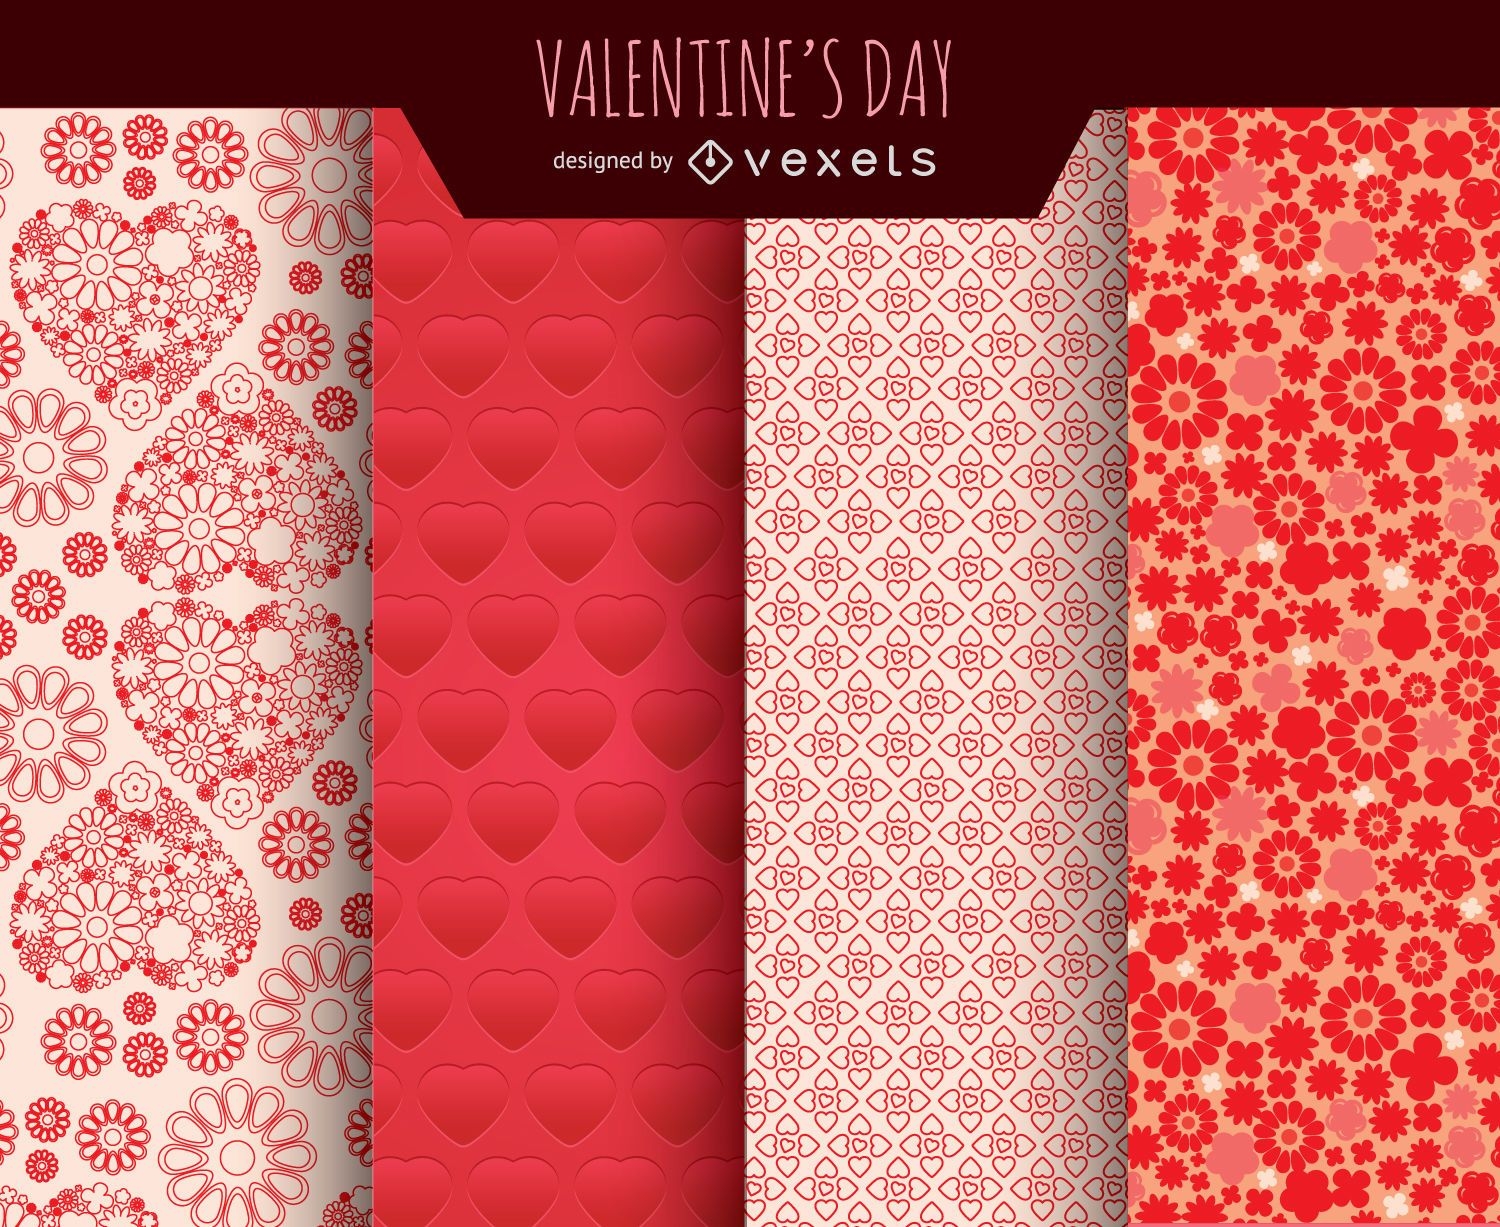 Valentine's Day backgrounds set